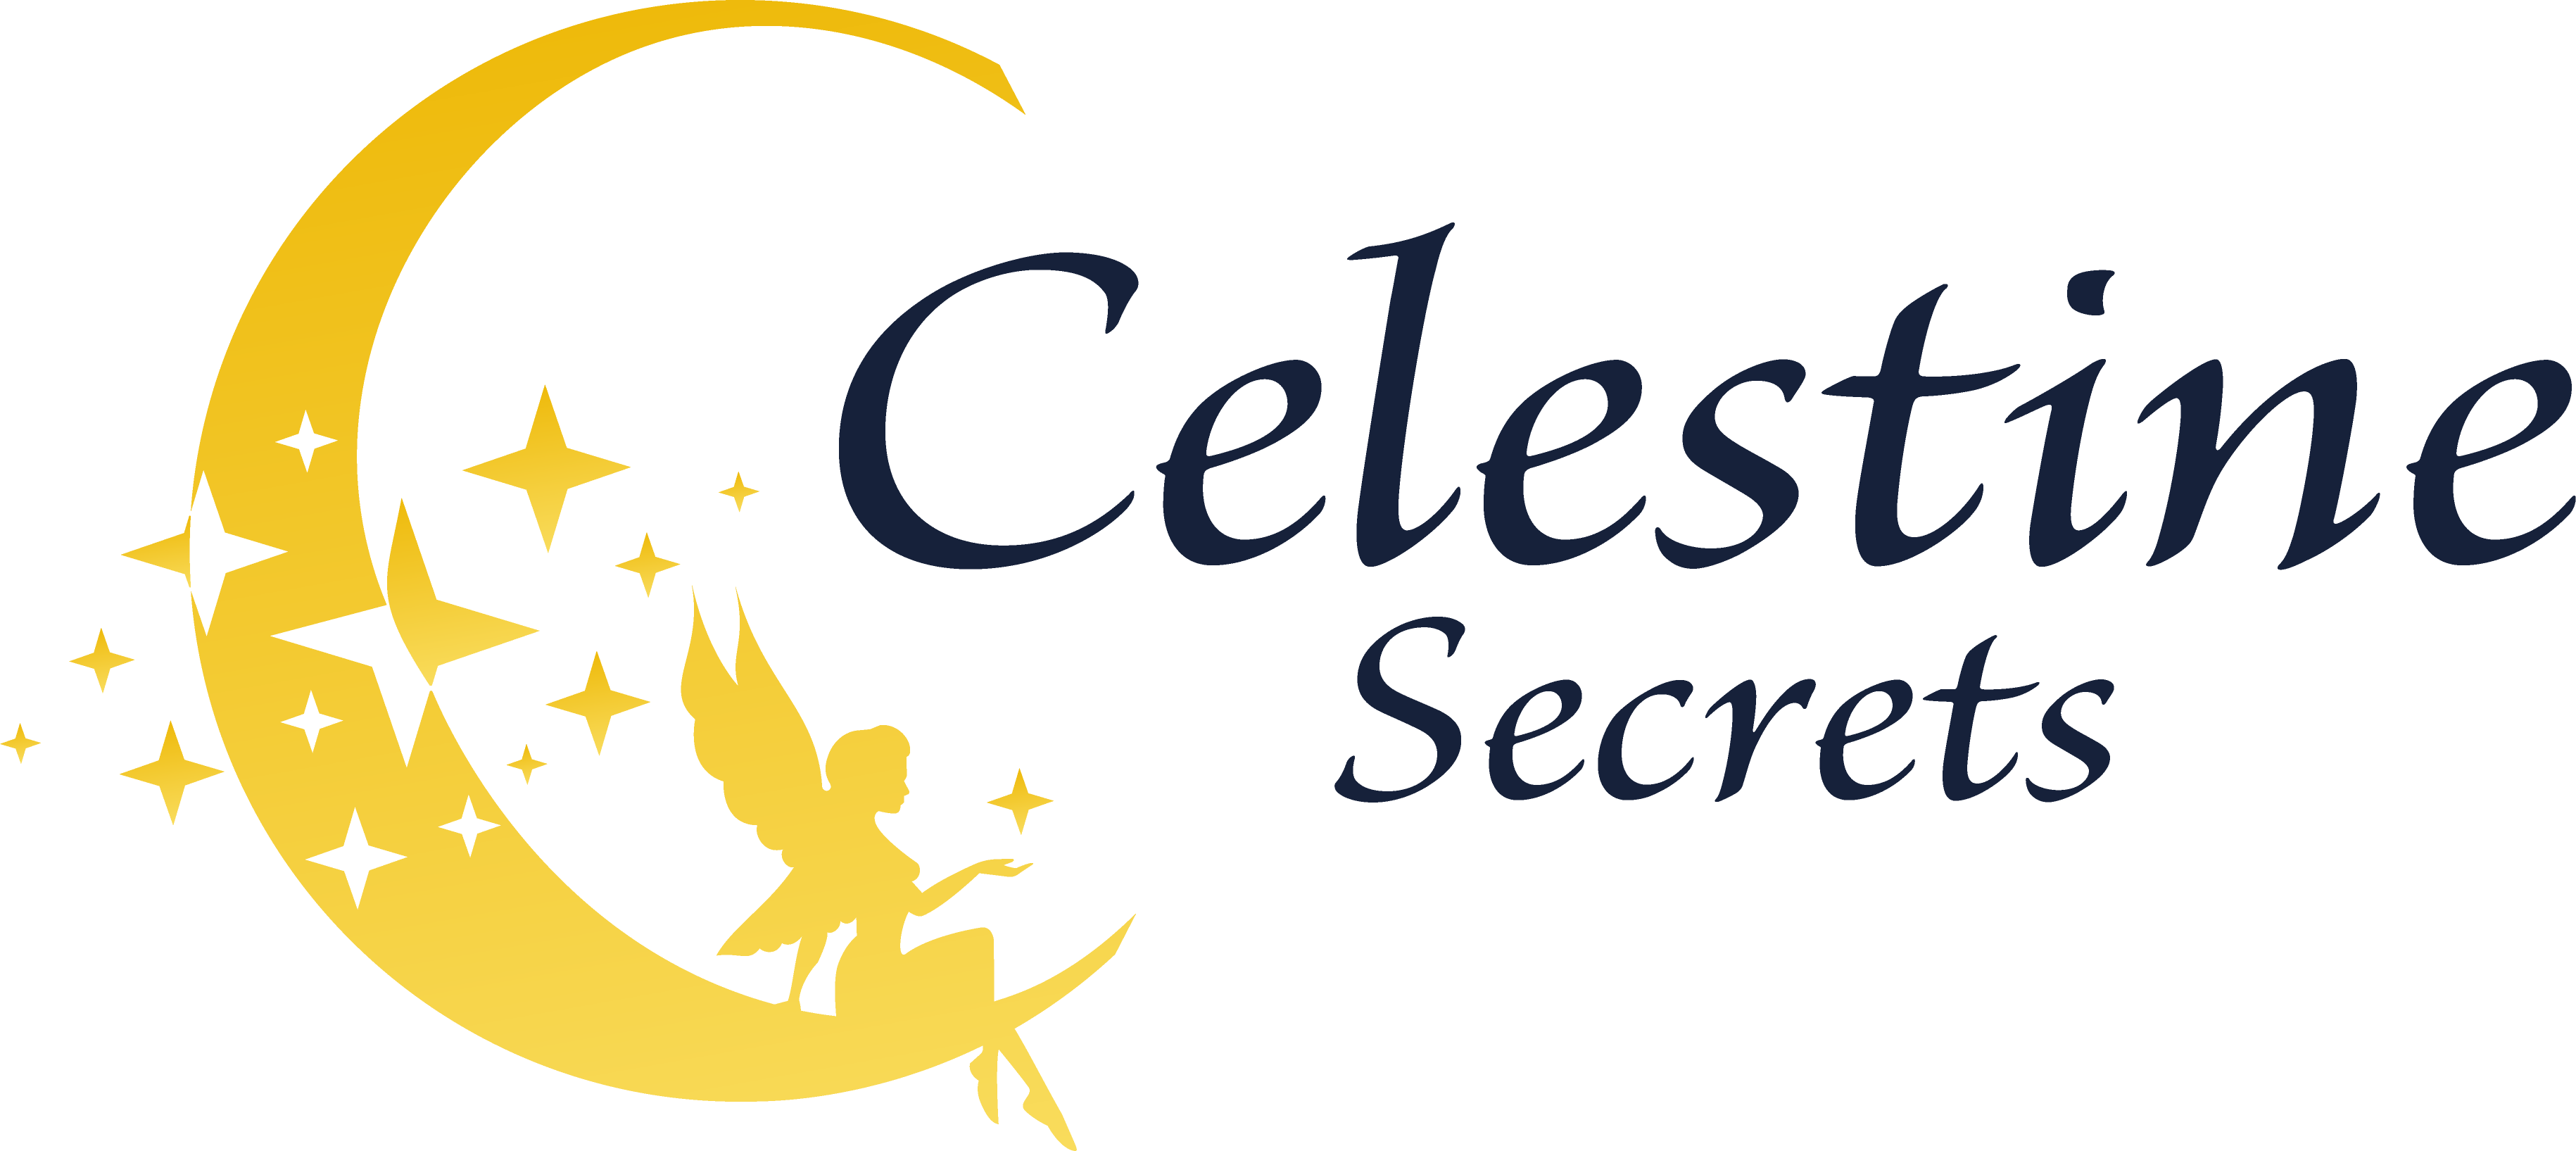 Celestine Secrets